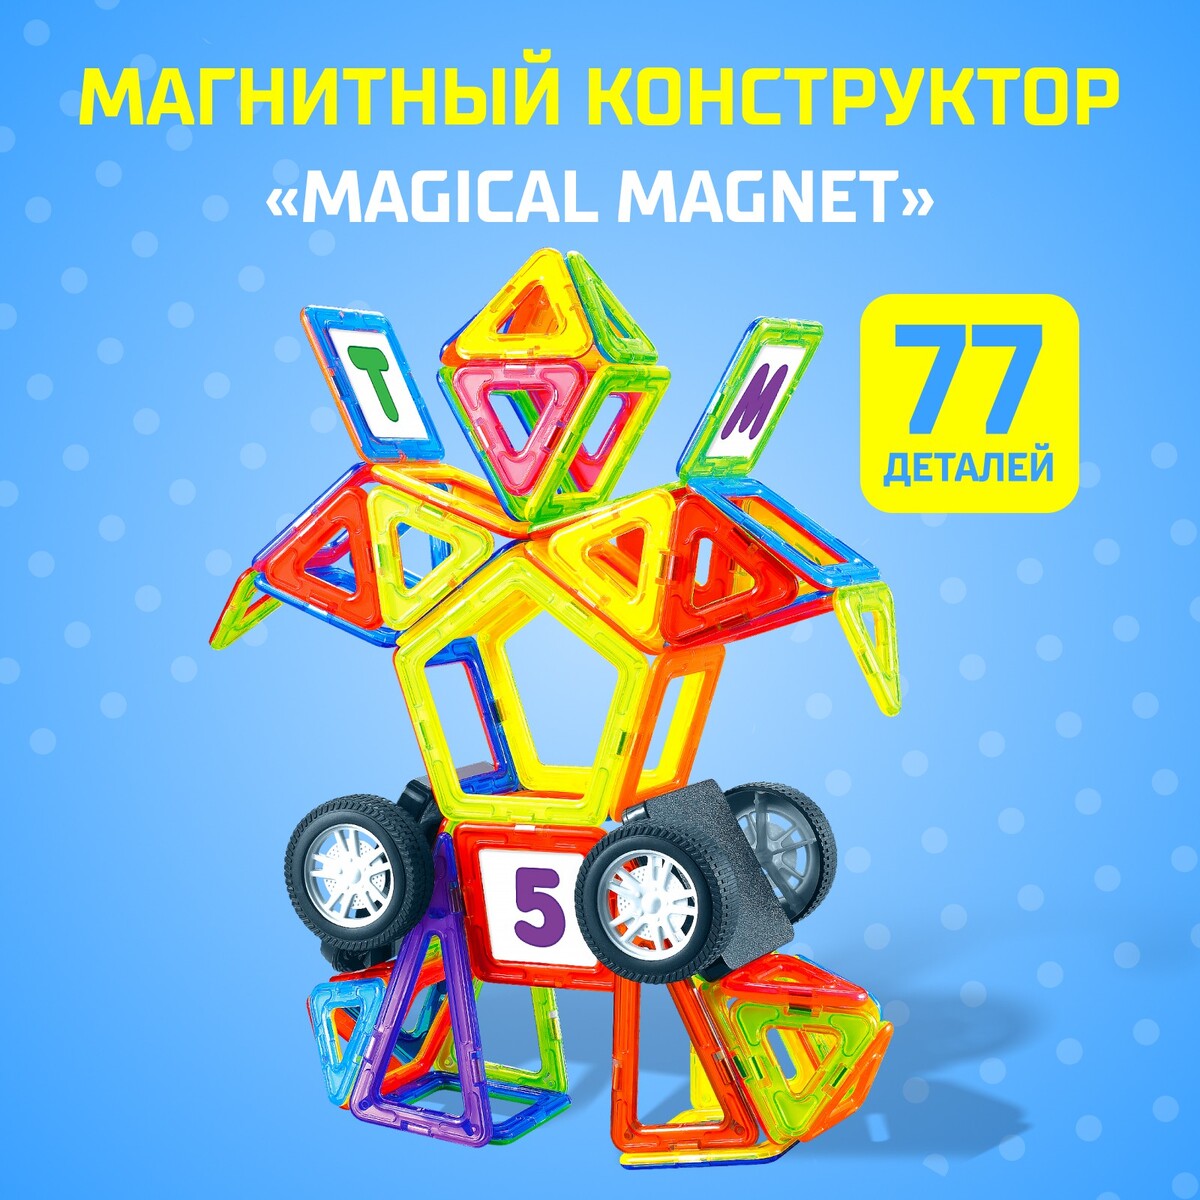   magical magnet, 77 ,  